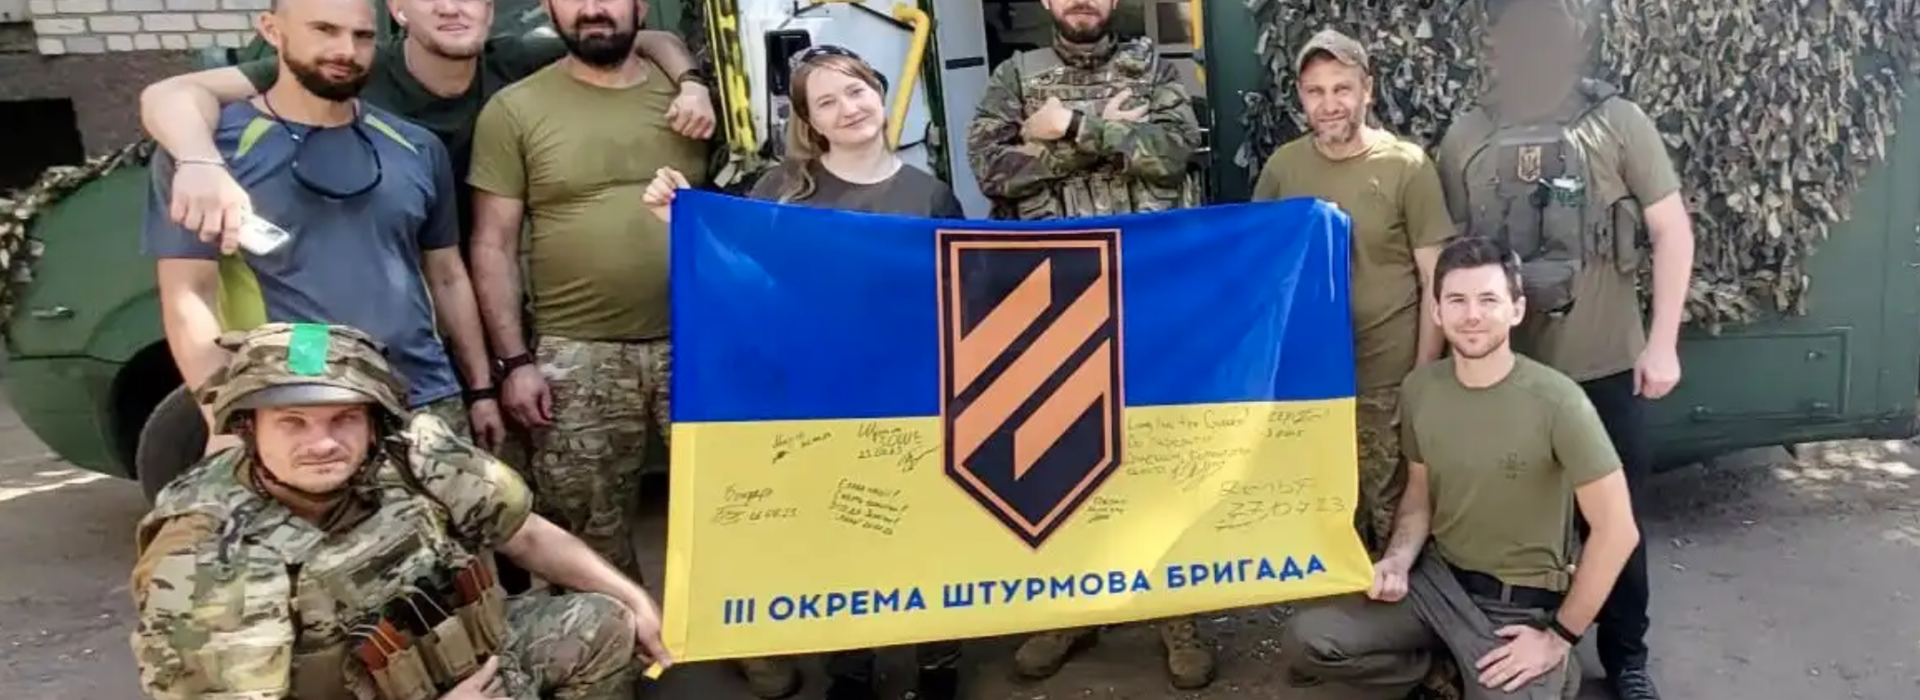 Soldiers in Ukraine.